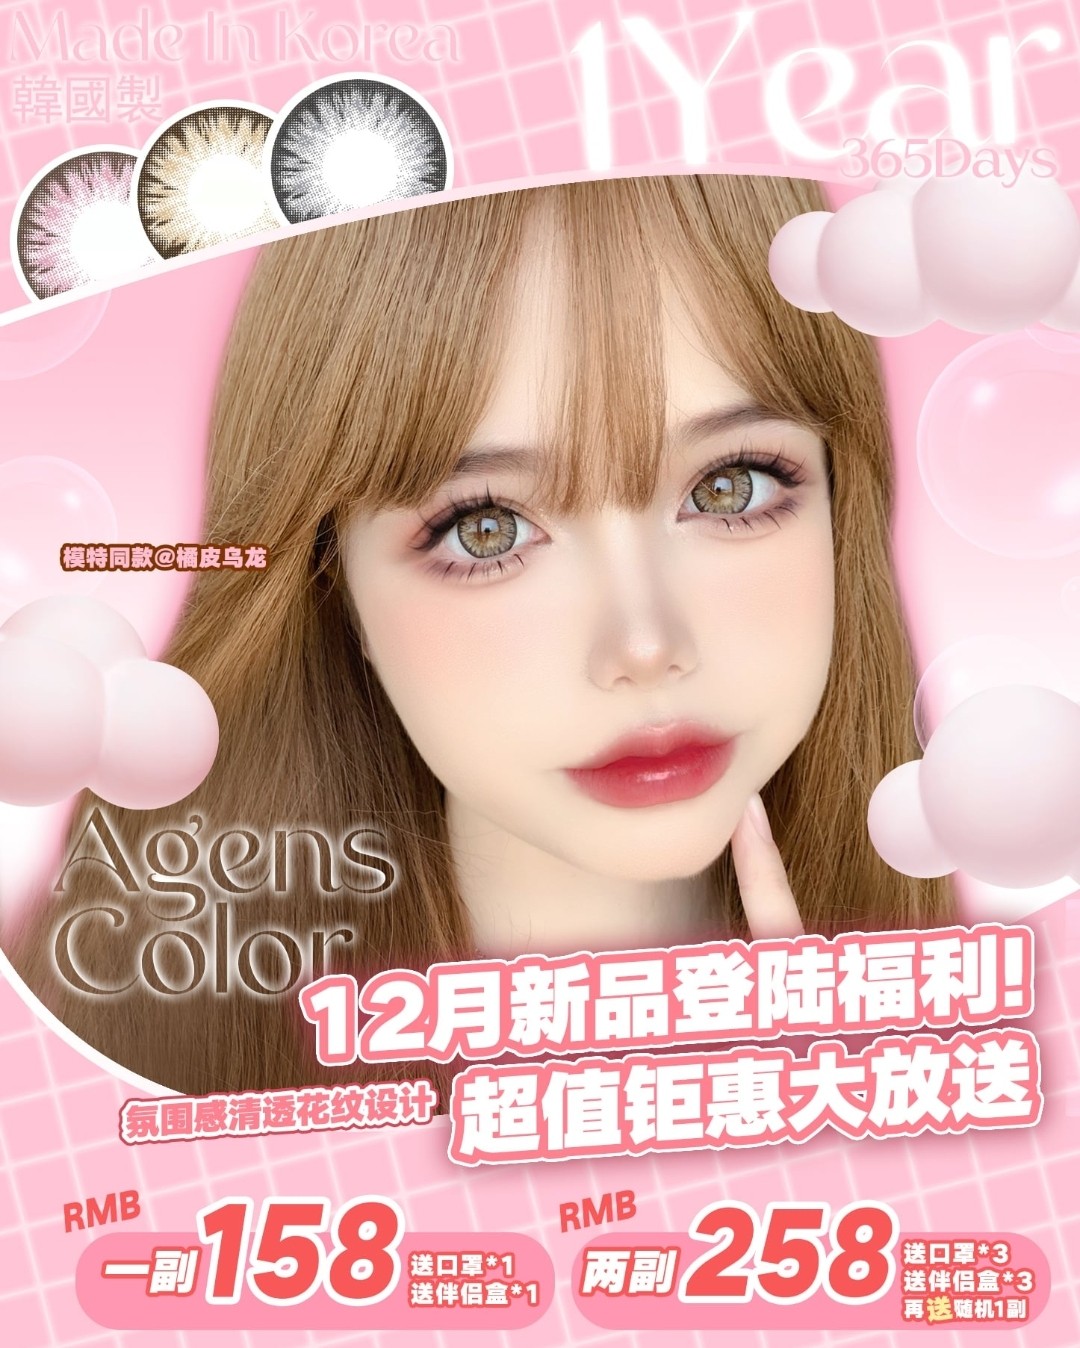 【上新】Agenscolor 12月新品活动“乌龙茶oolong”系列